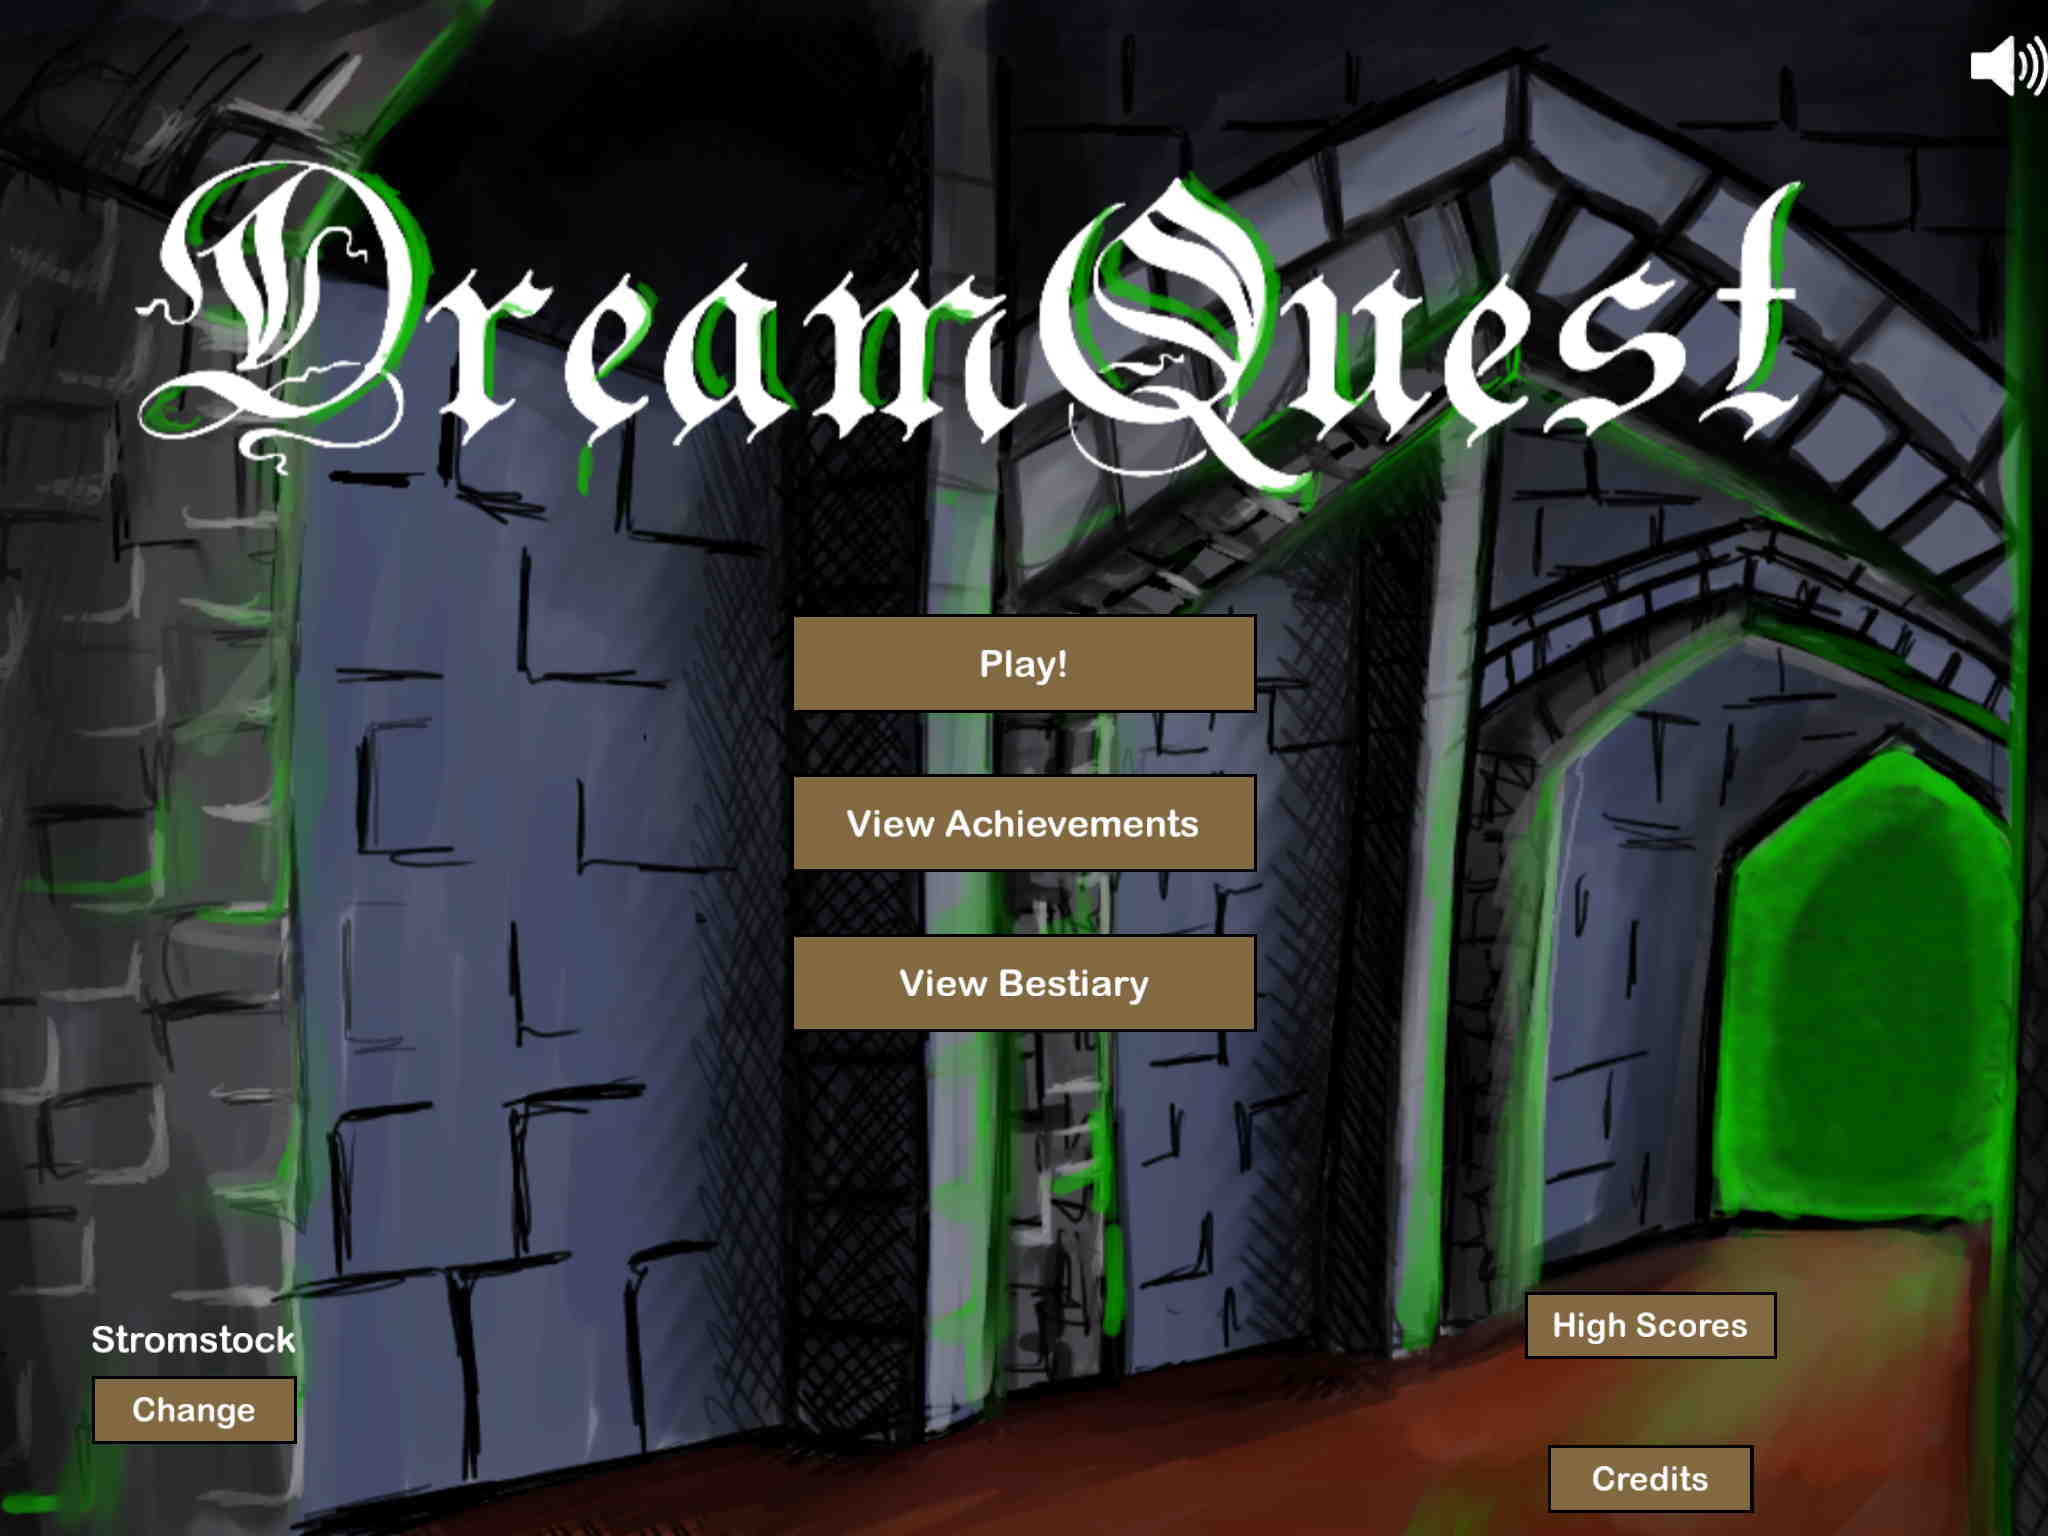 DreamQuest01